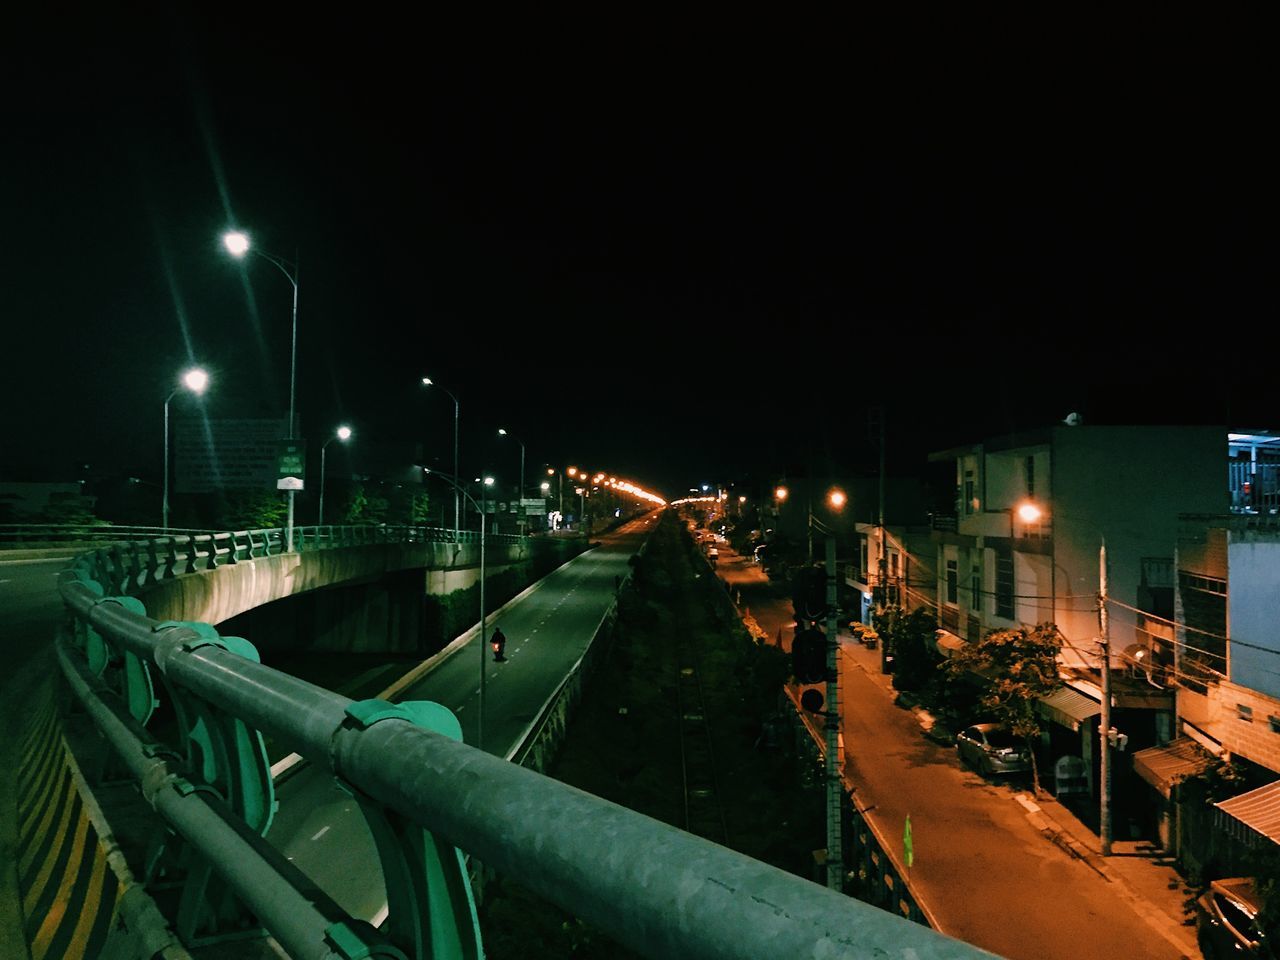 ILLUMINATED STREET LIGHTS AT NIGHT